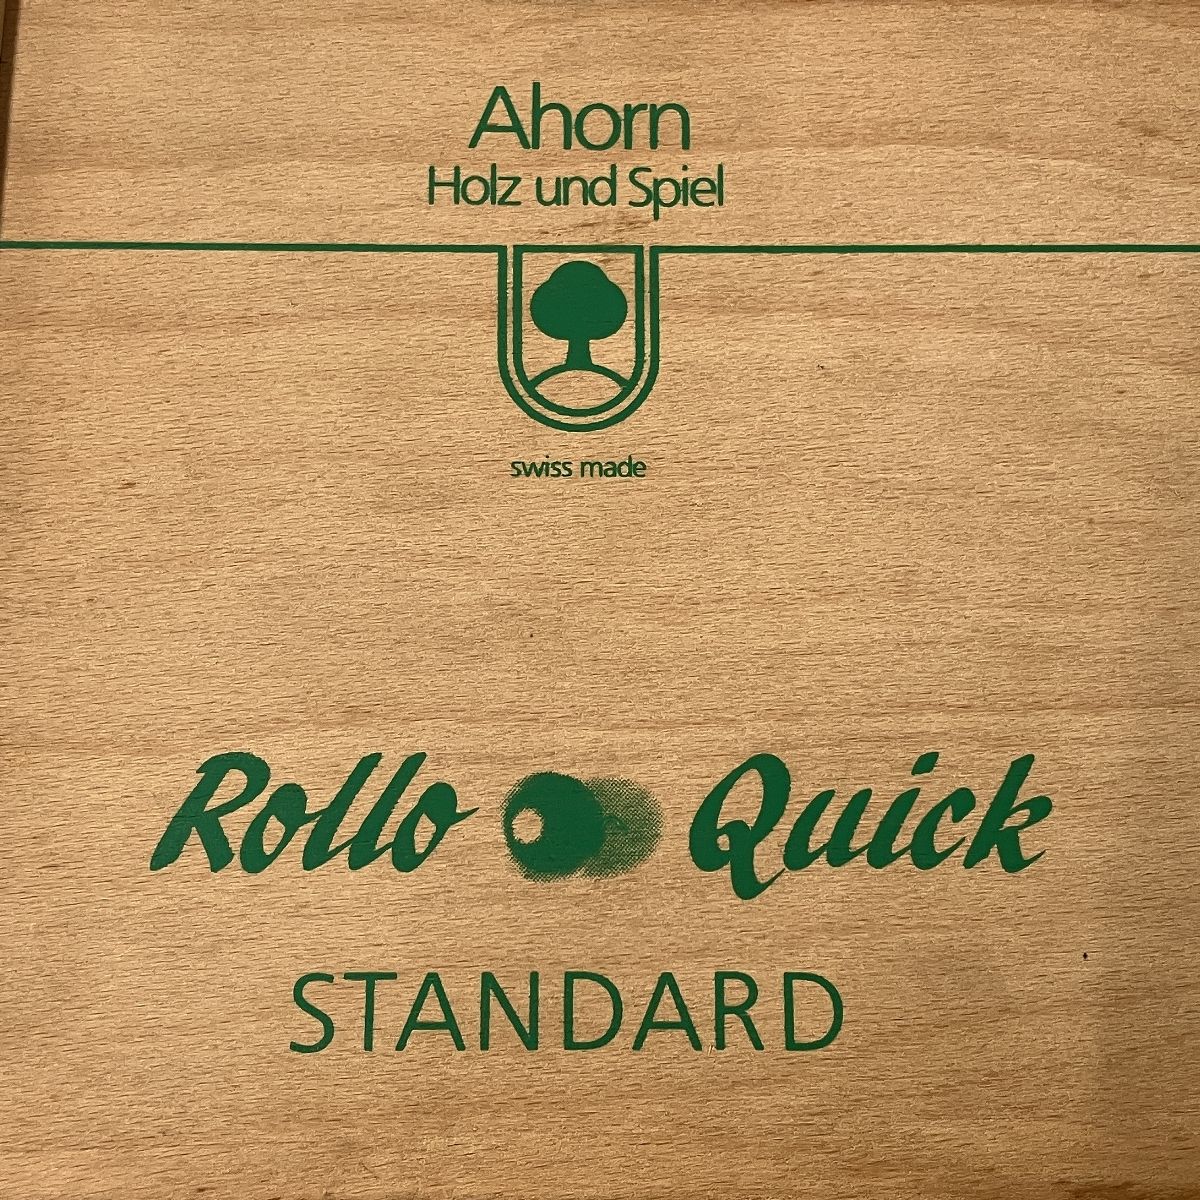 AHORN ROLLO QUICK STANDARD スイス製 知育玩具 中古 美品 Y8919597 - メルカリ